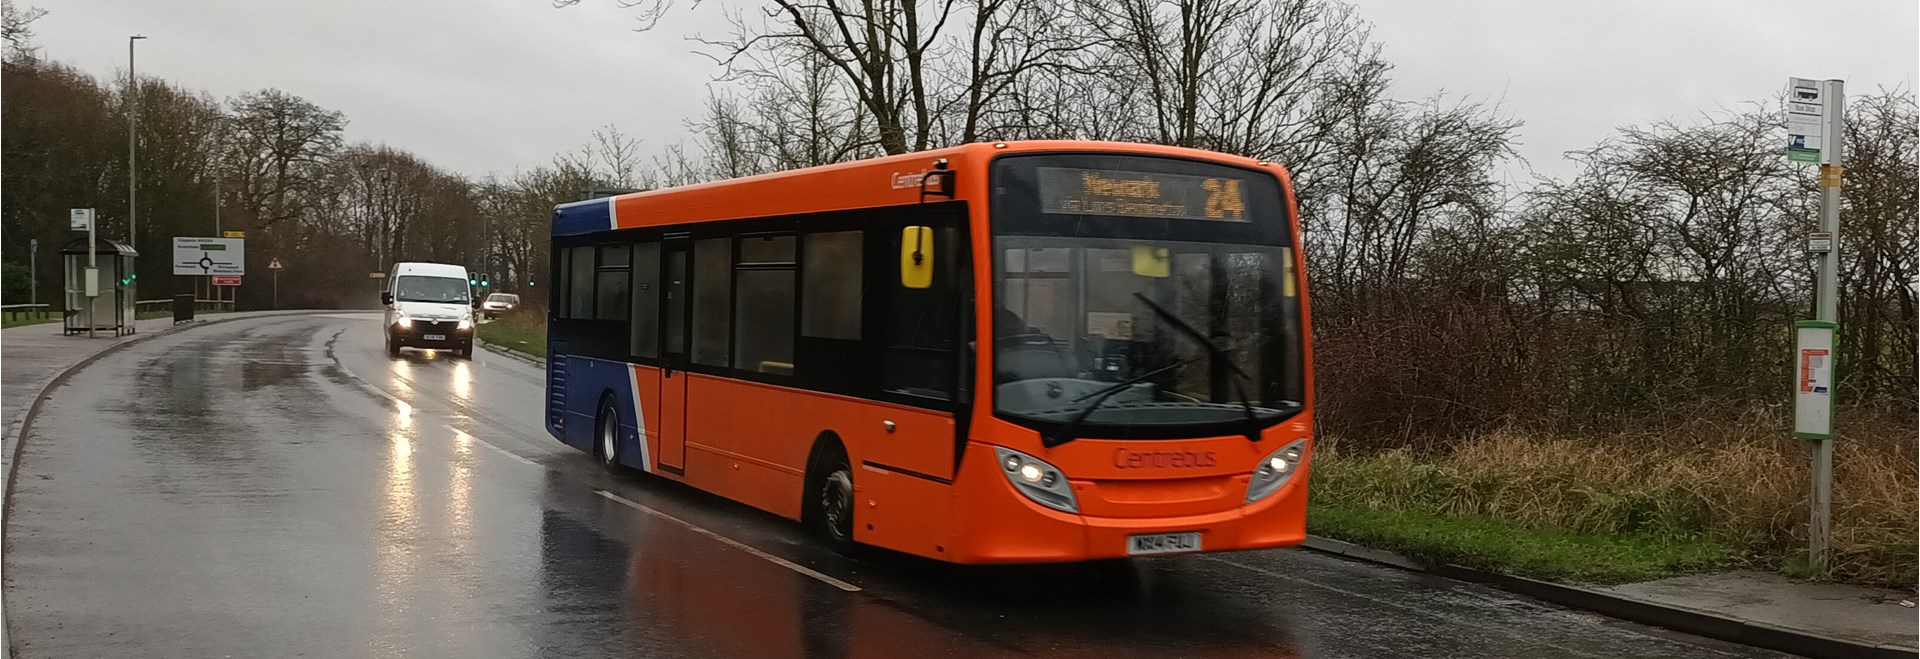 Centrebus 24